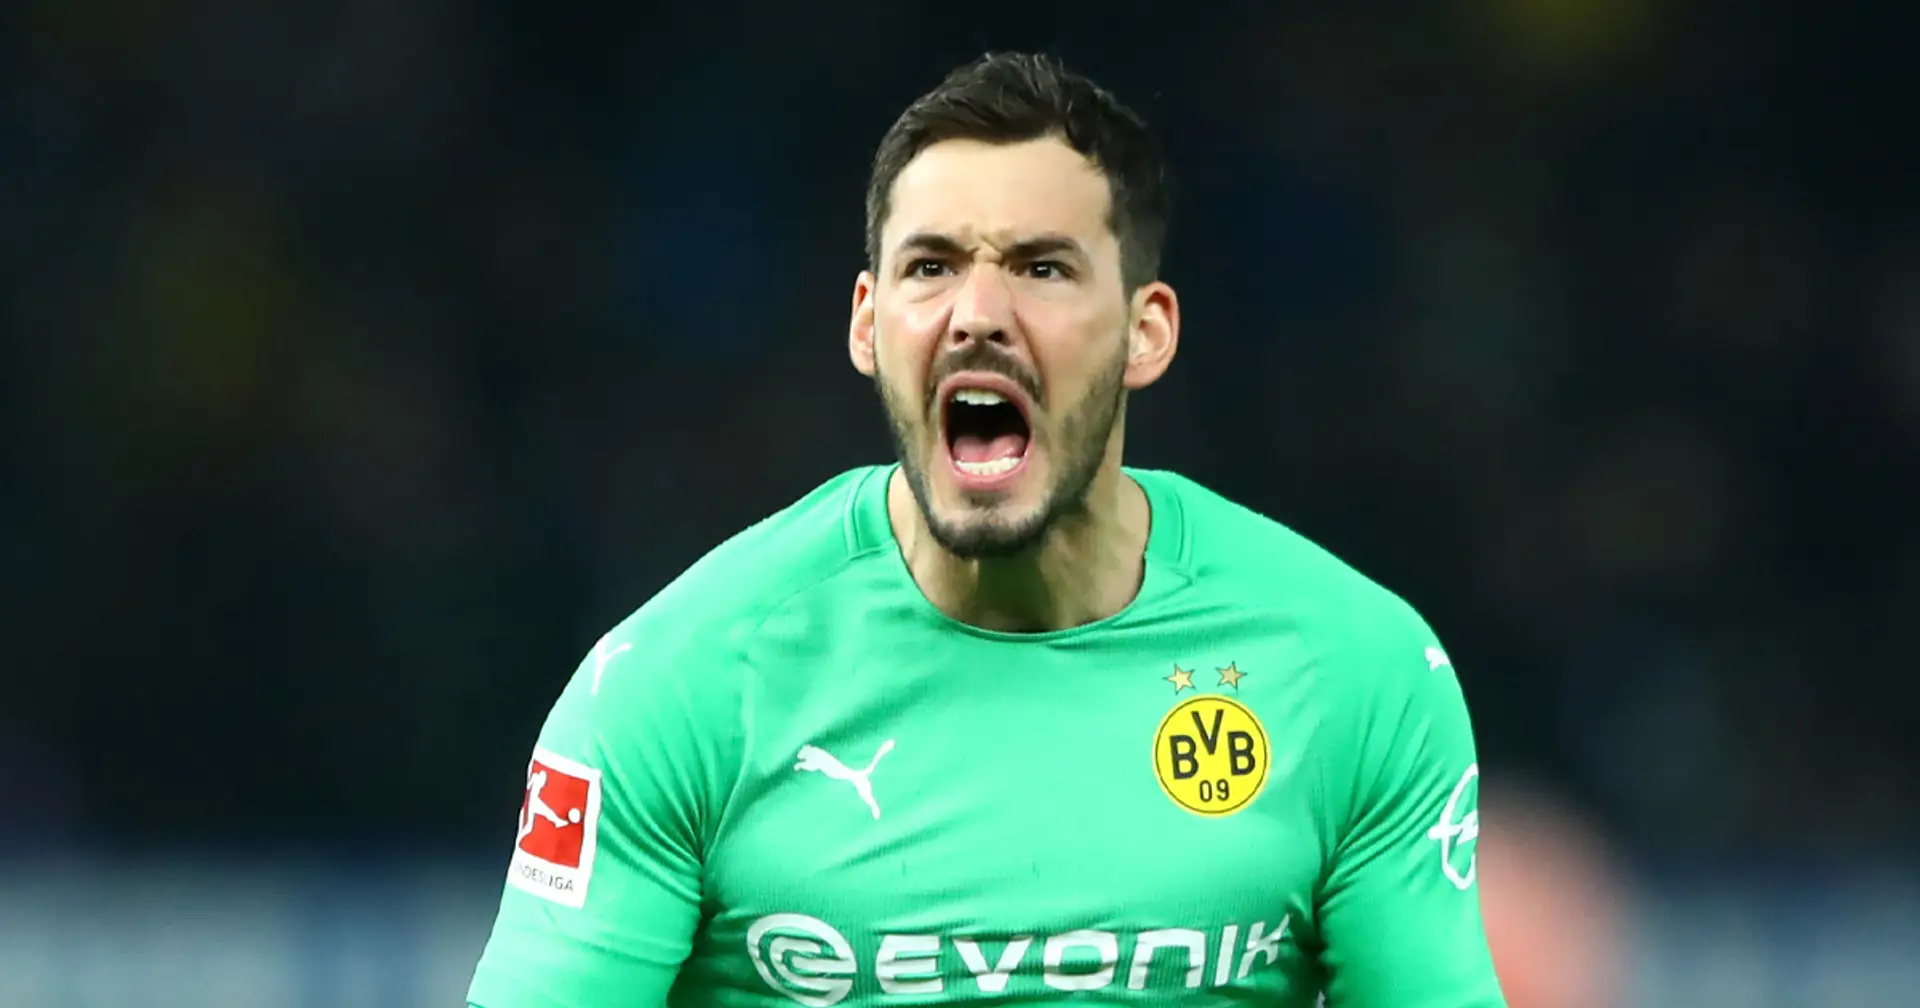 OFFIZIELL: Roman Bürki verlässt Borussia Dortmund im Sommer 2022